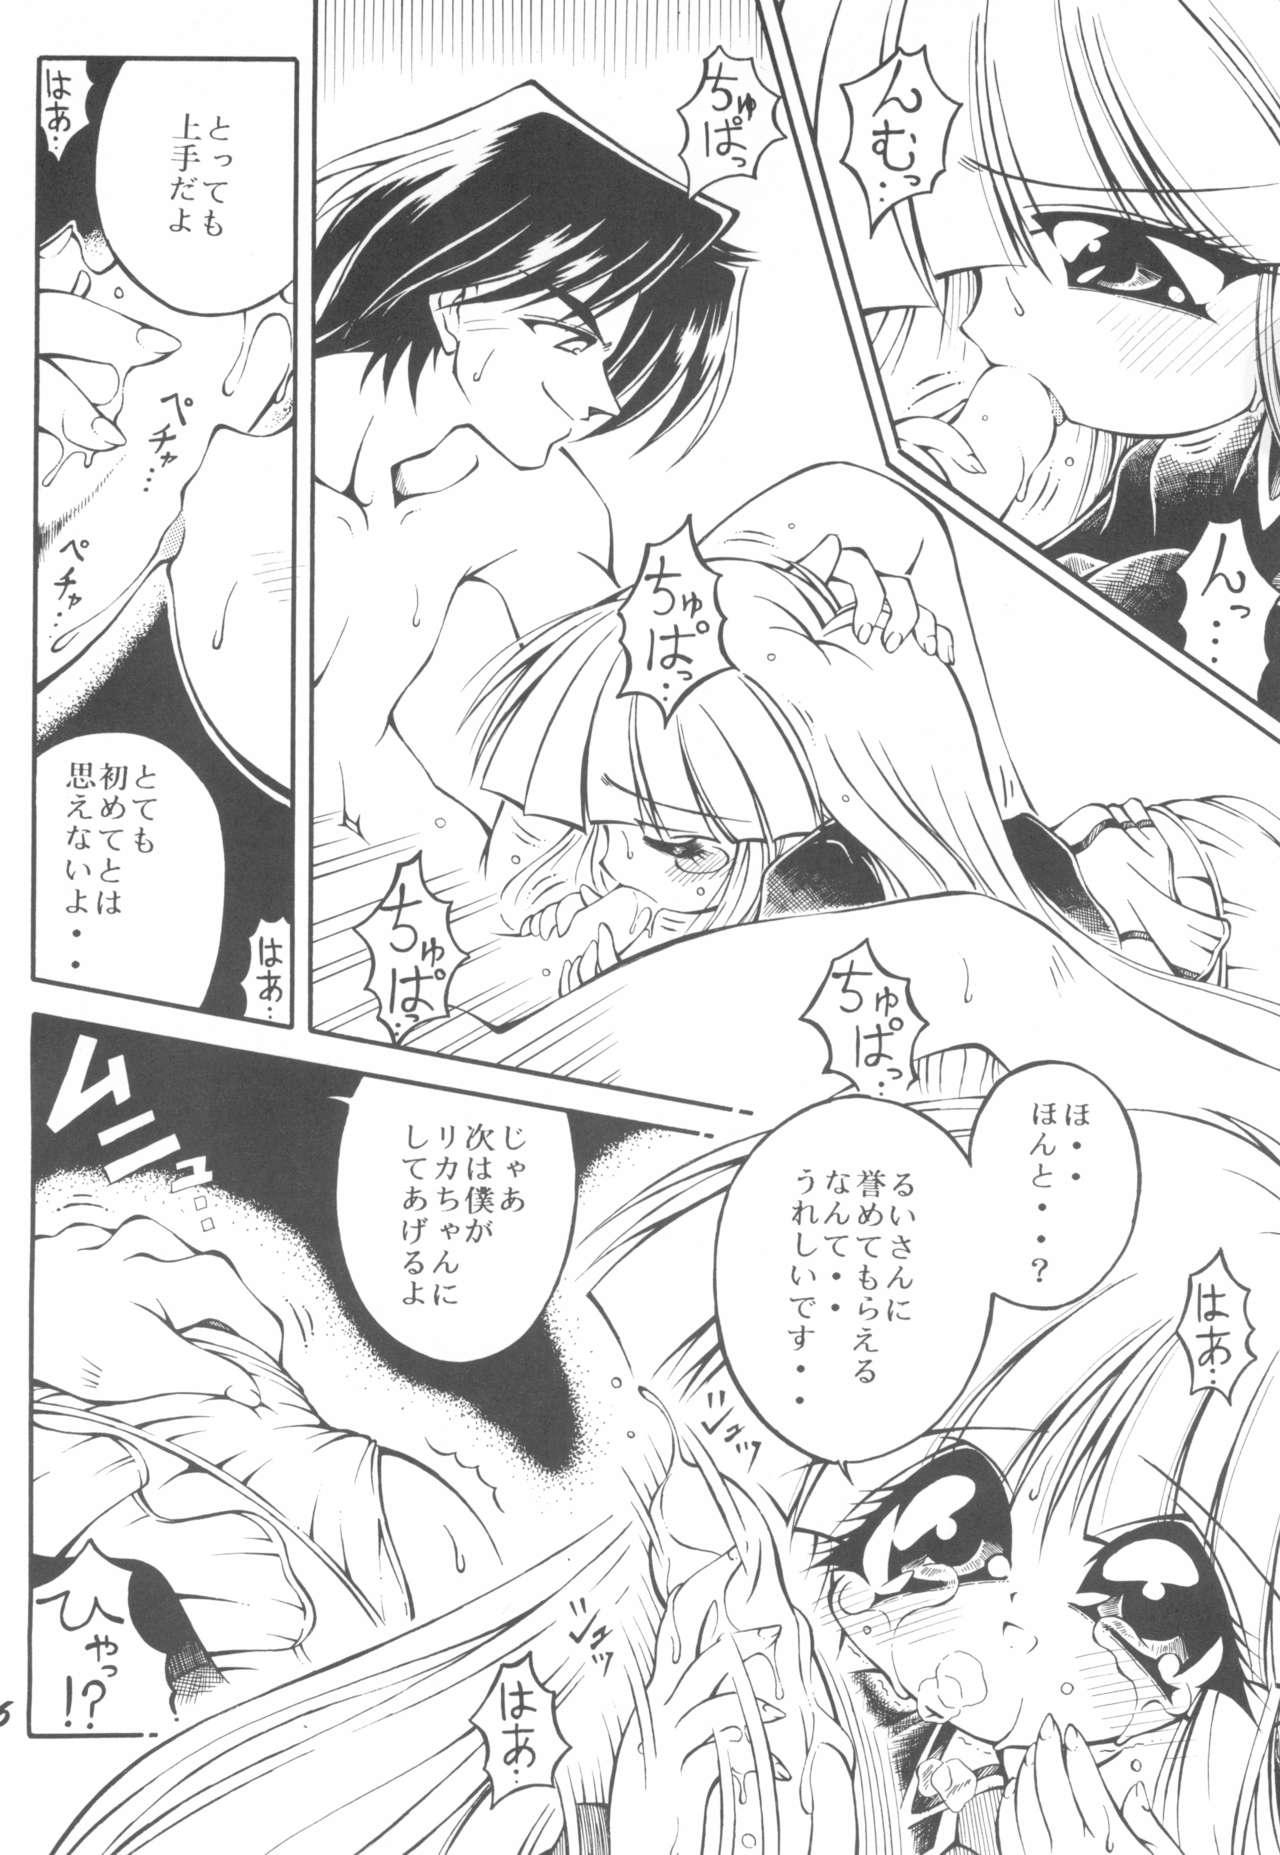 Spit Hanahiraki Mebae no Toki STEP - Super doll licca-chan Old - Page 6